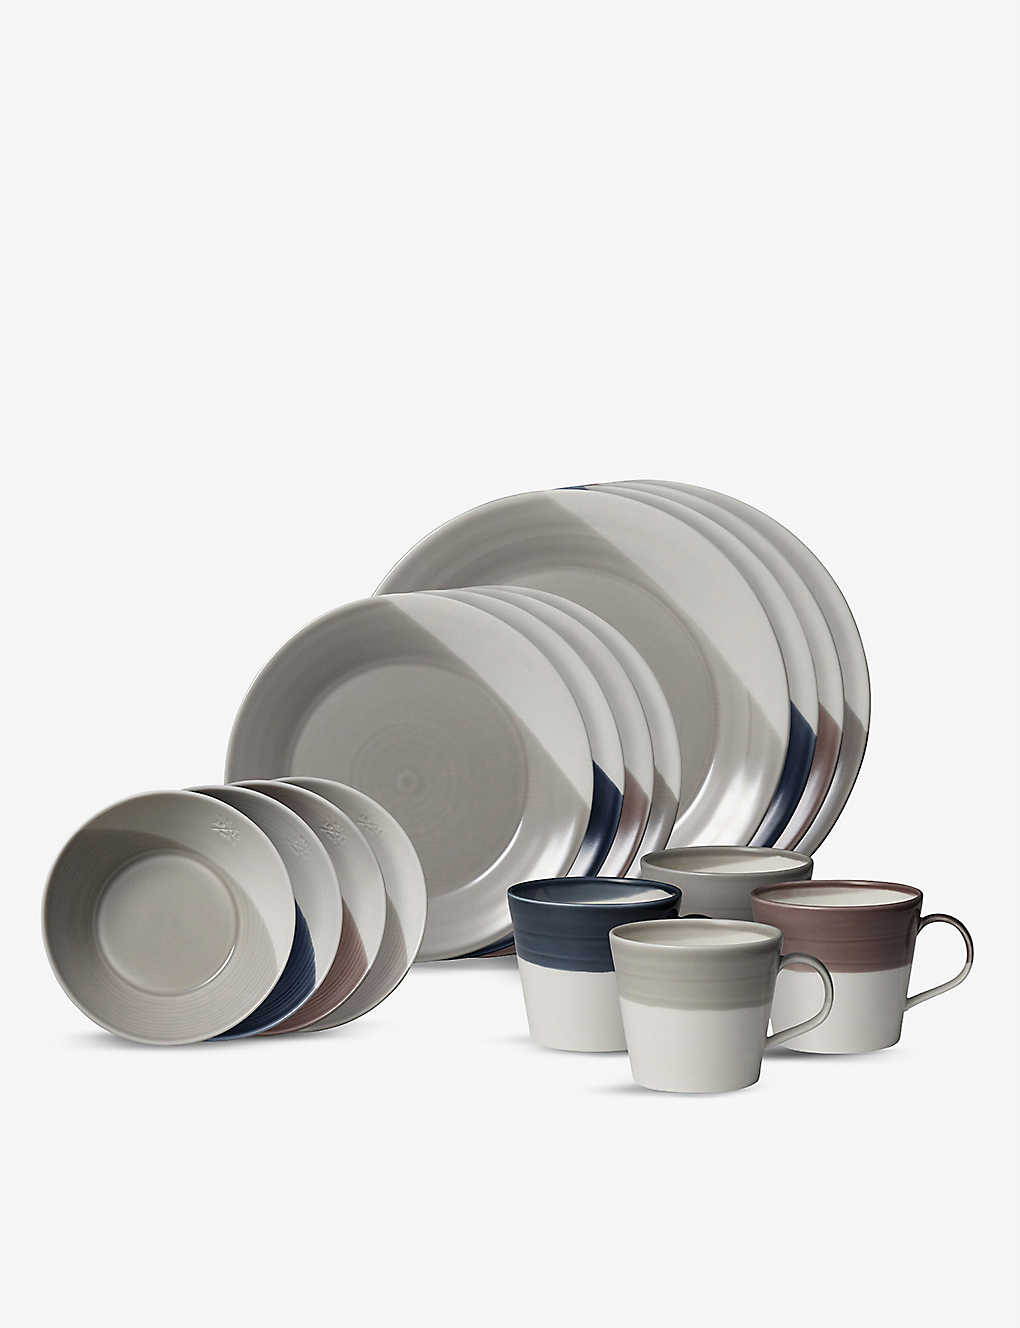 Royal Doulton Bowls Of Plenty Mixed 16-piece Porcelain Dinner Set